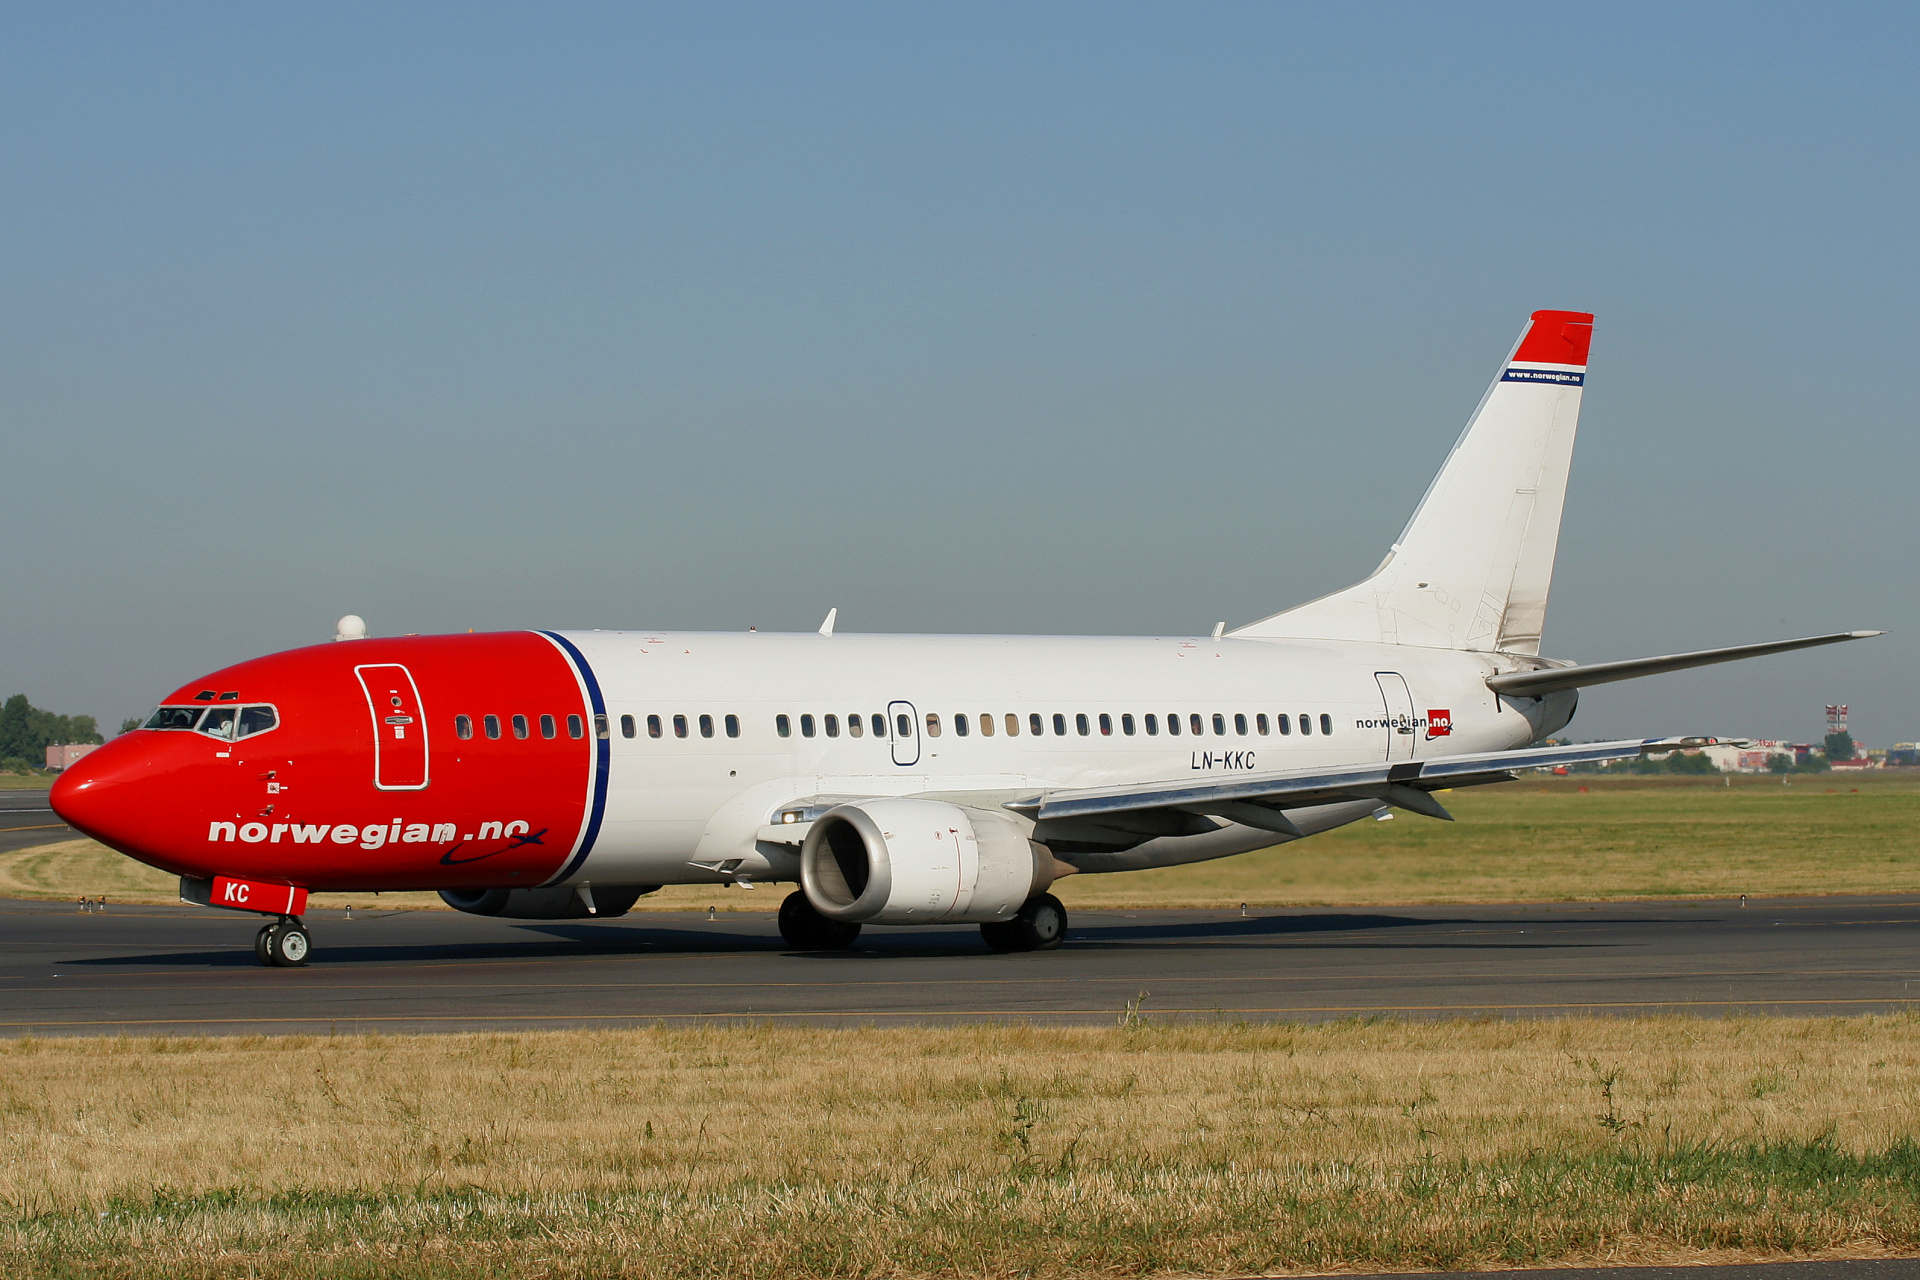 LN-KKC (Aircraft » EPWA Spotting » Boeing 737-300 » Norwegian Air Shuttle)